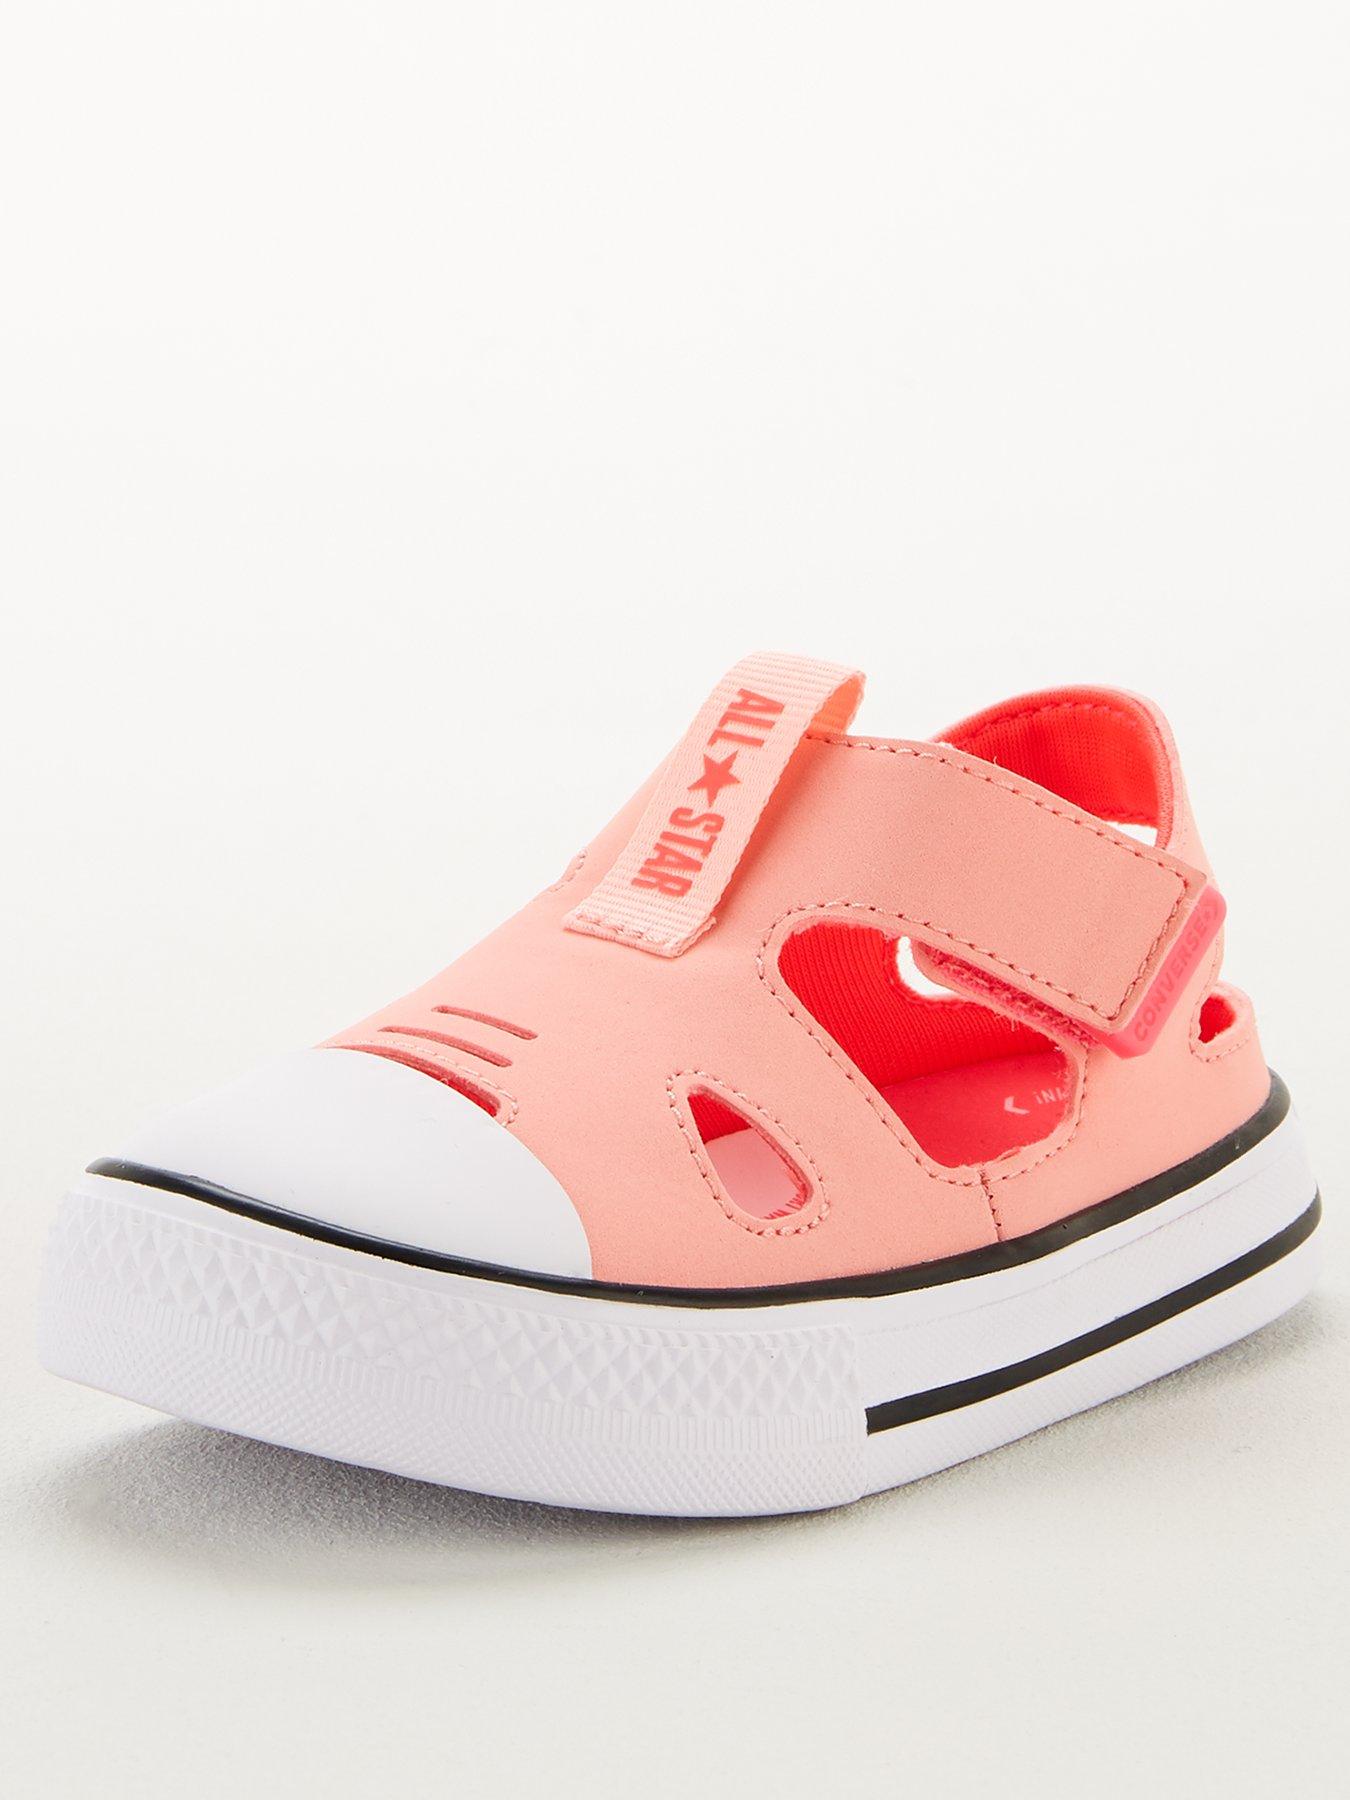 converse toddler sandals